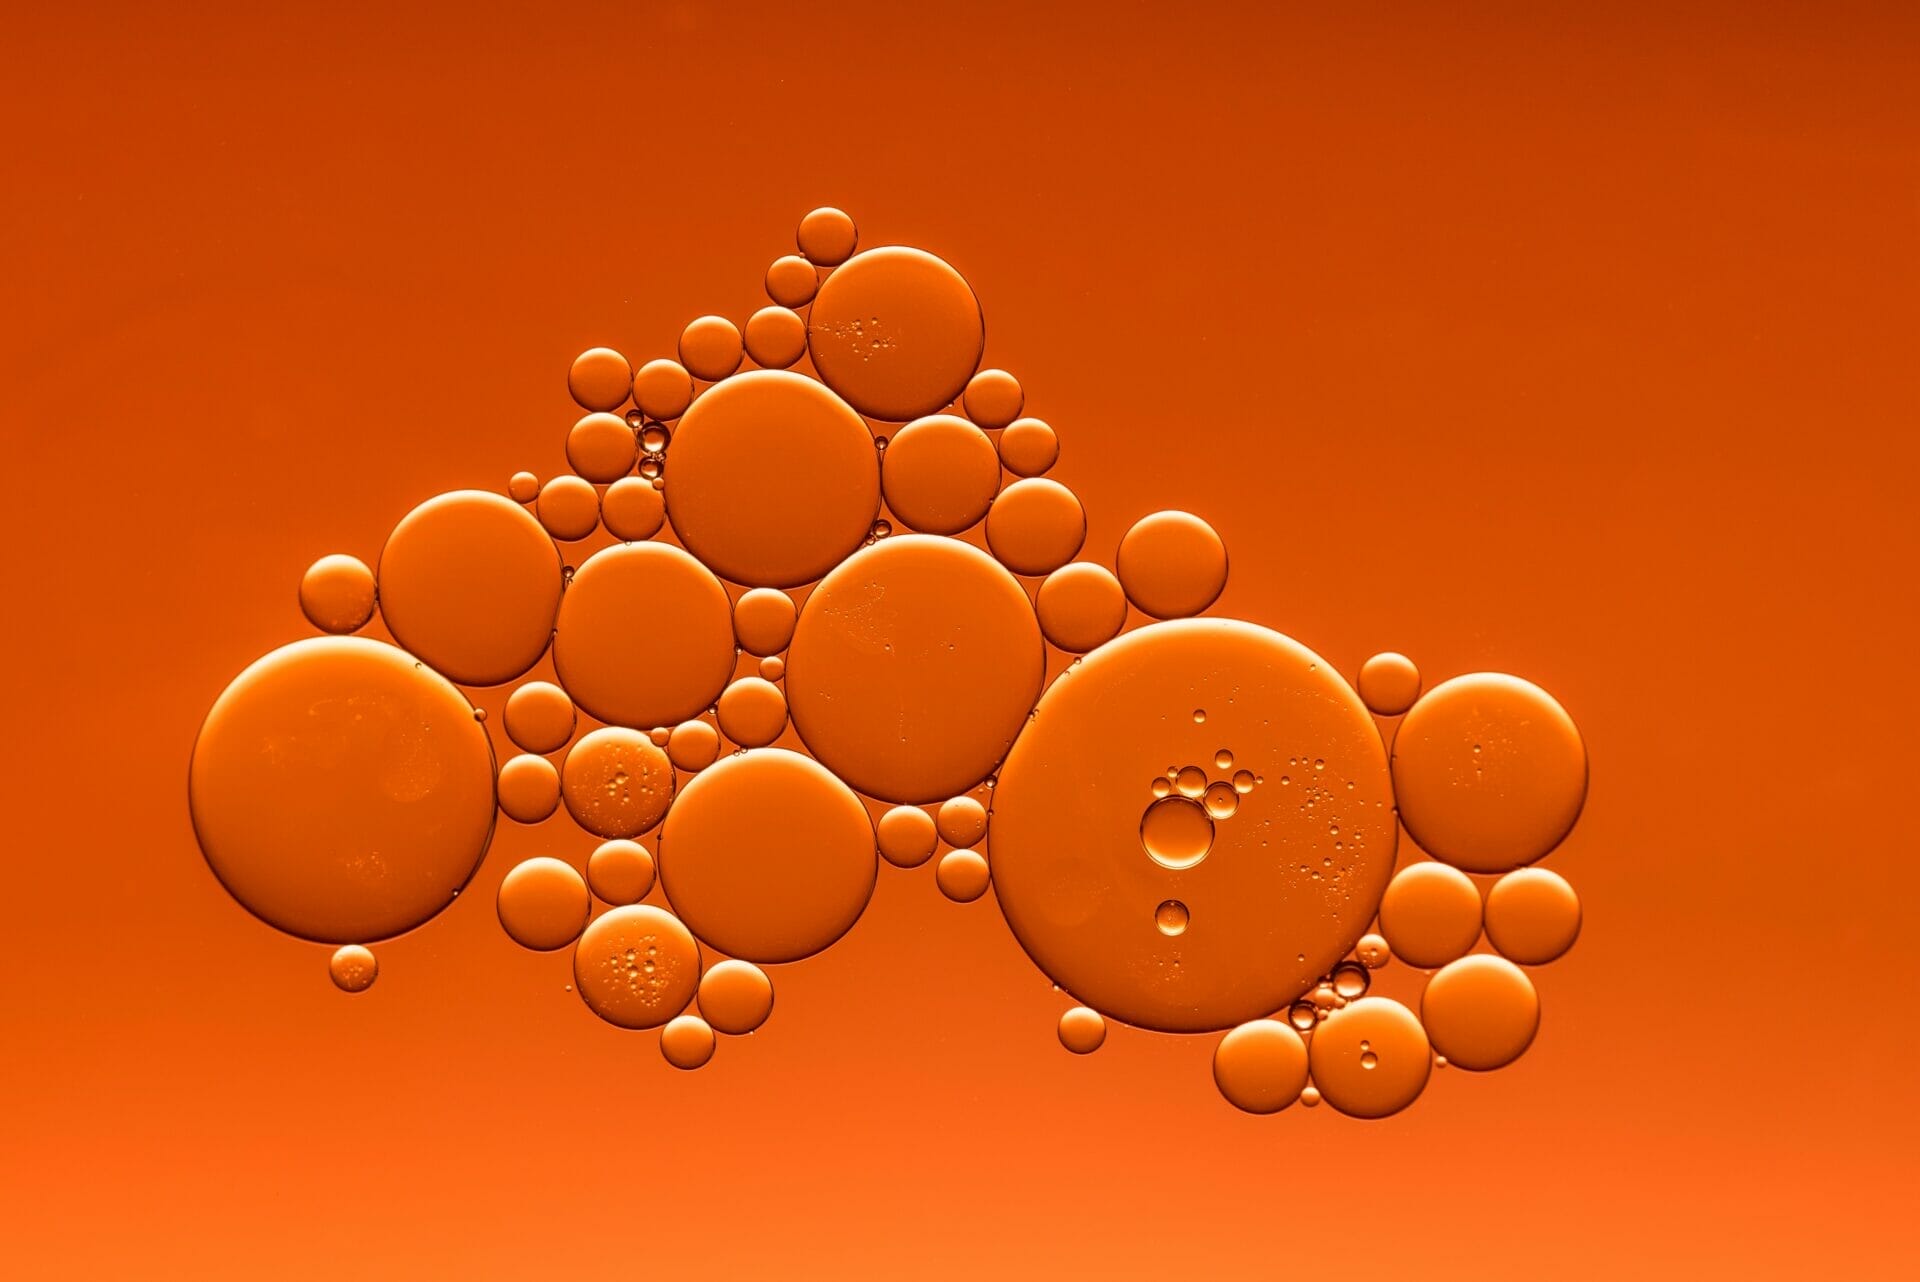 Liquid bubbles on an orange background